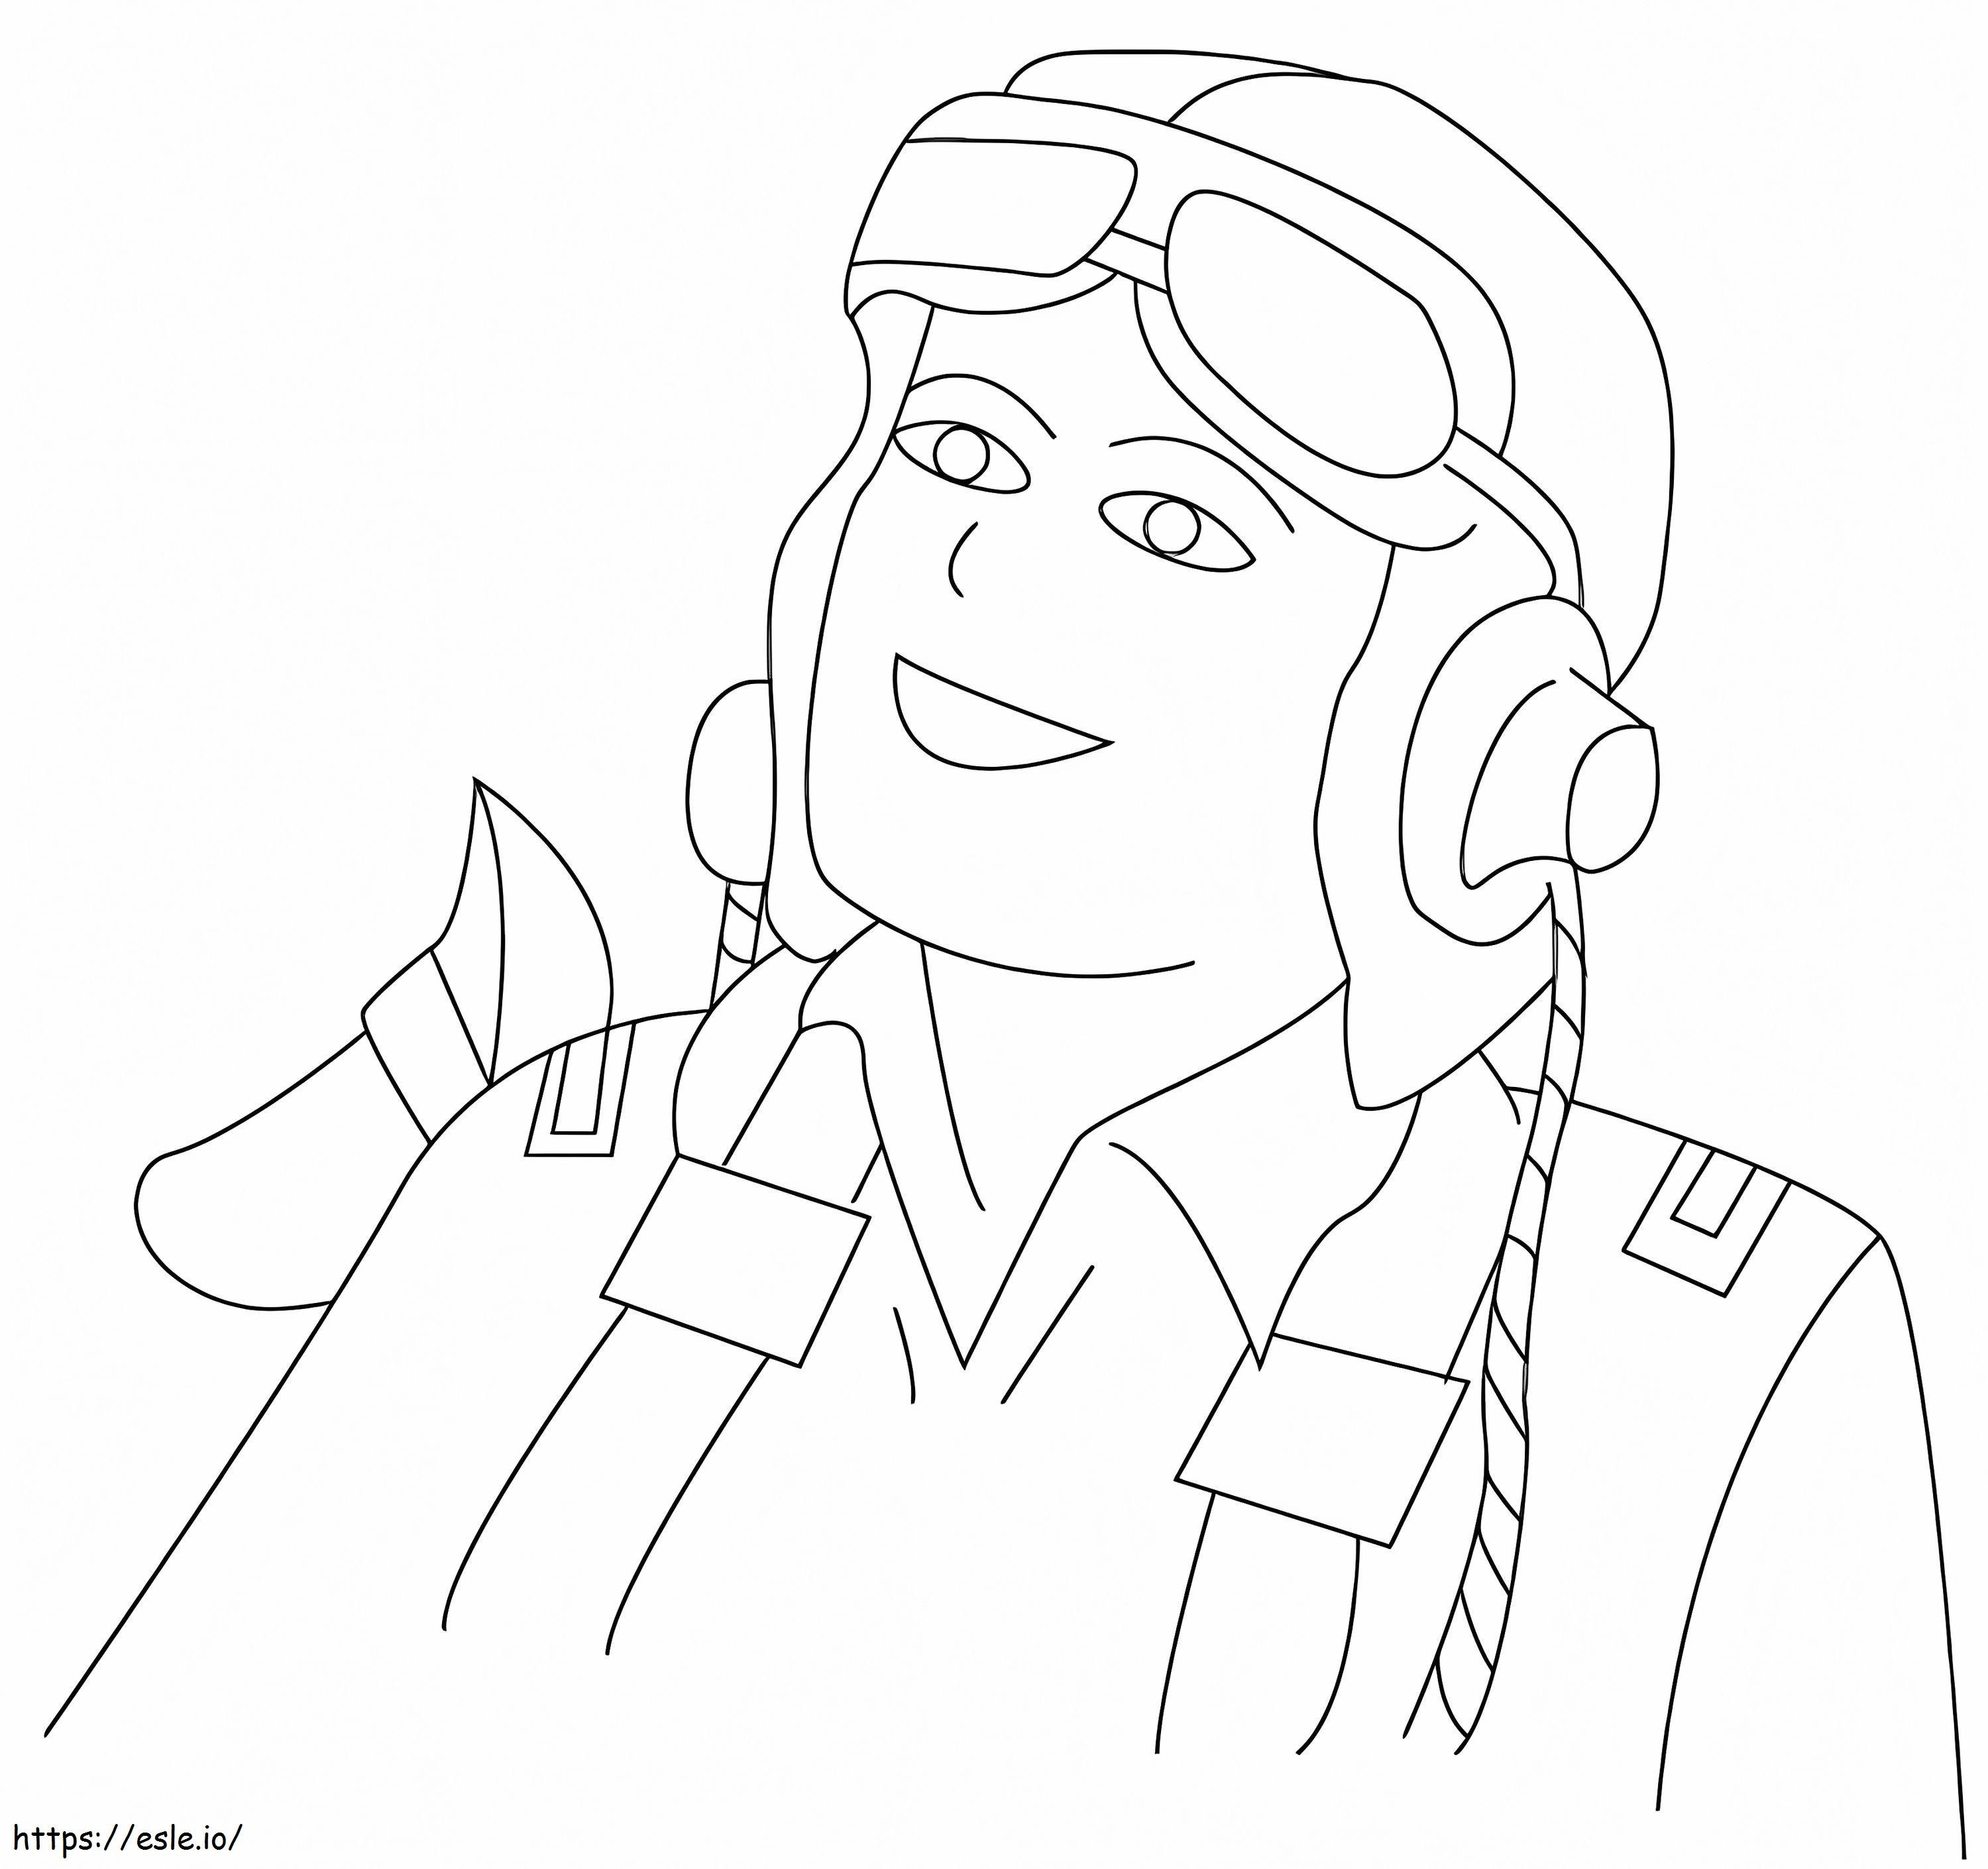 Pilot Smiling coloring page